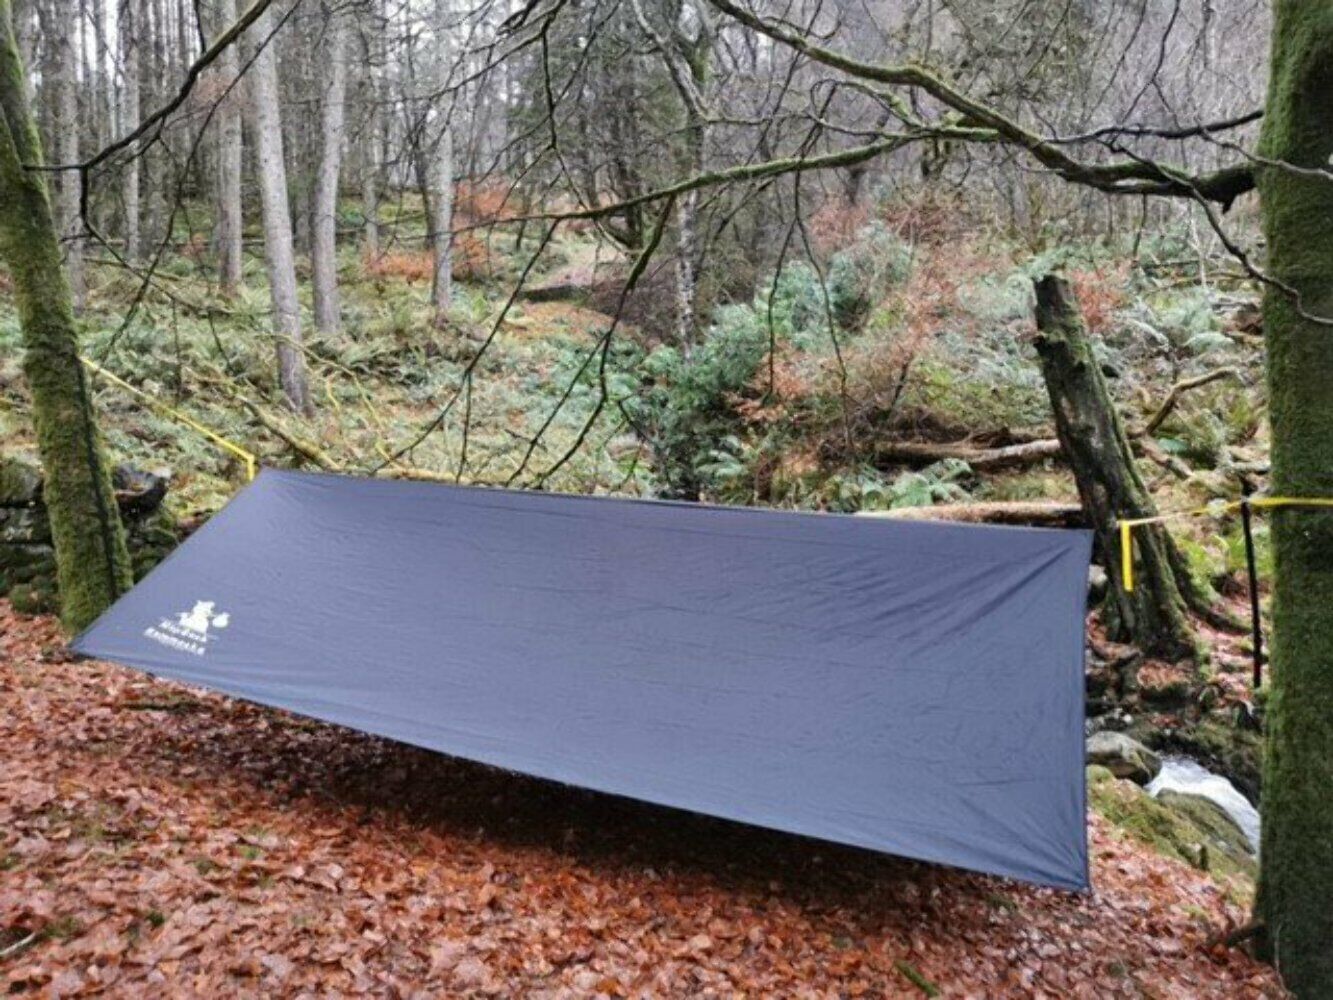 NapSack DS Auto Tension Tarp camping shelter tarpaulin